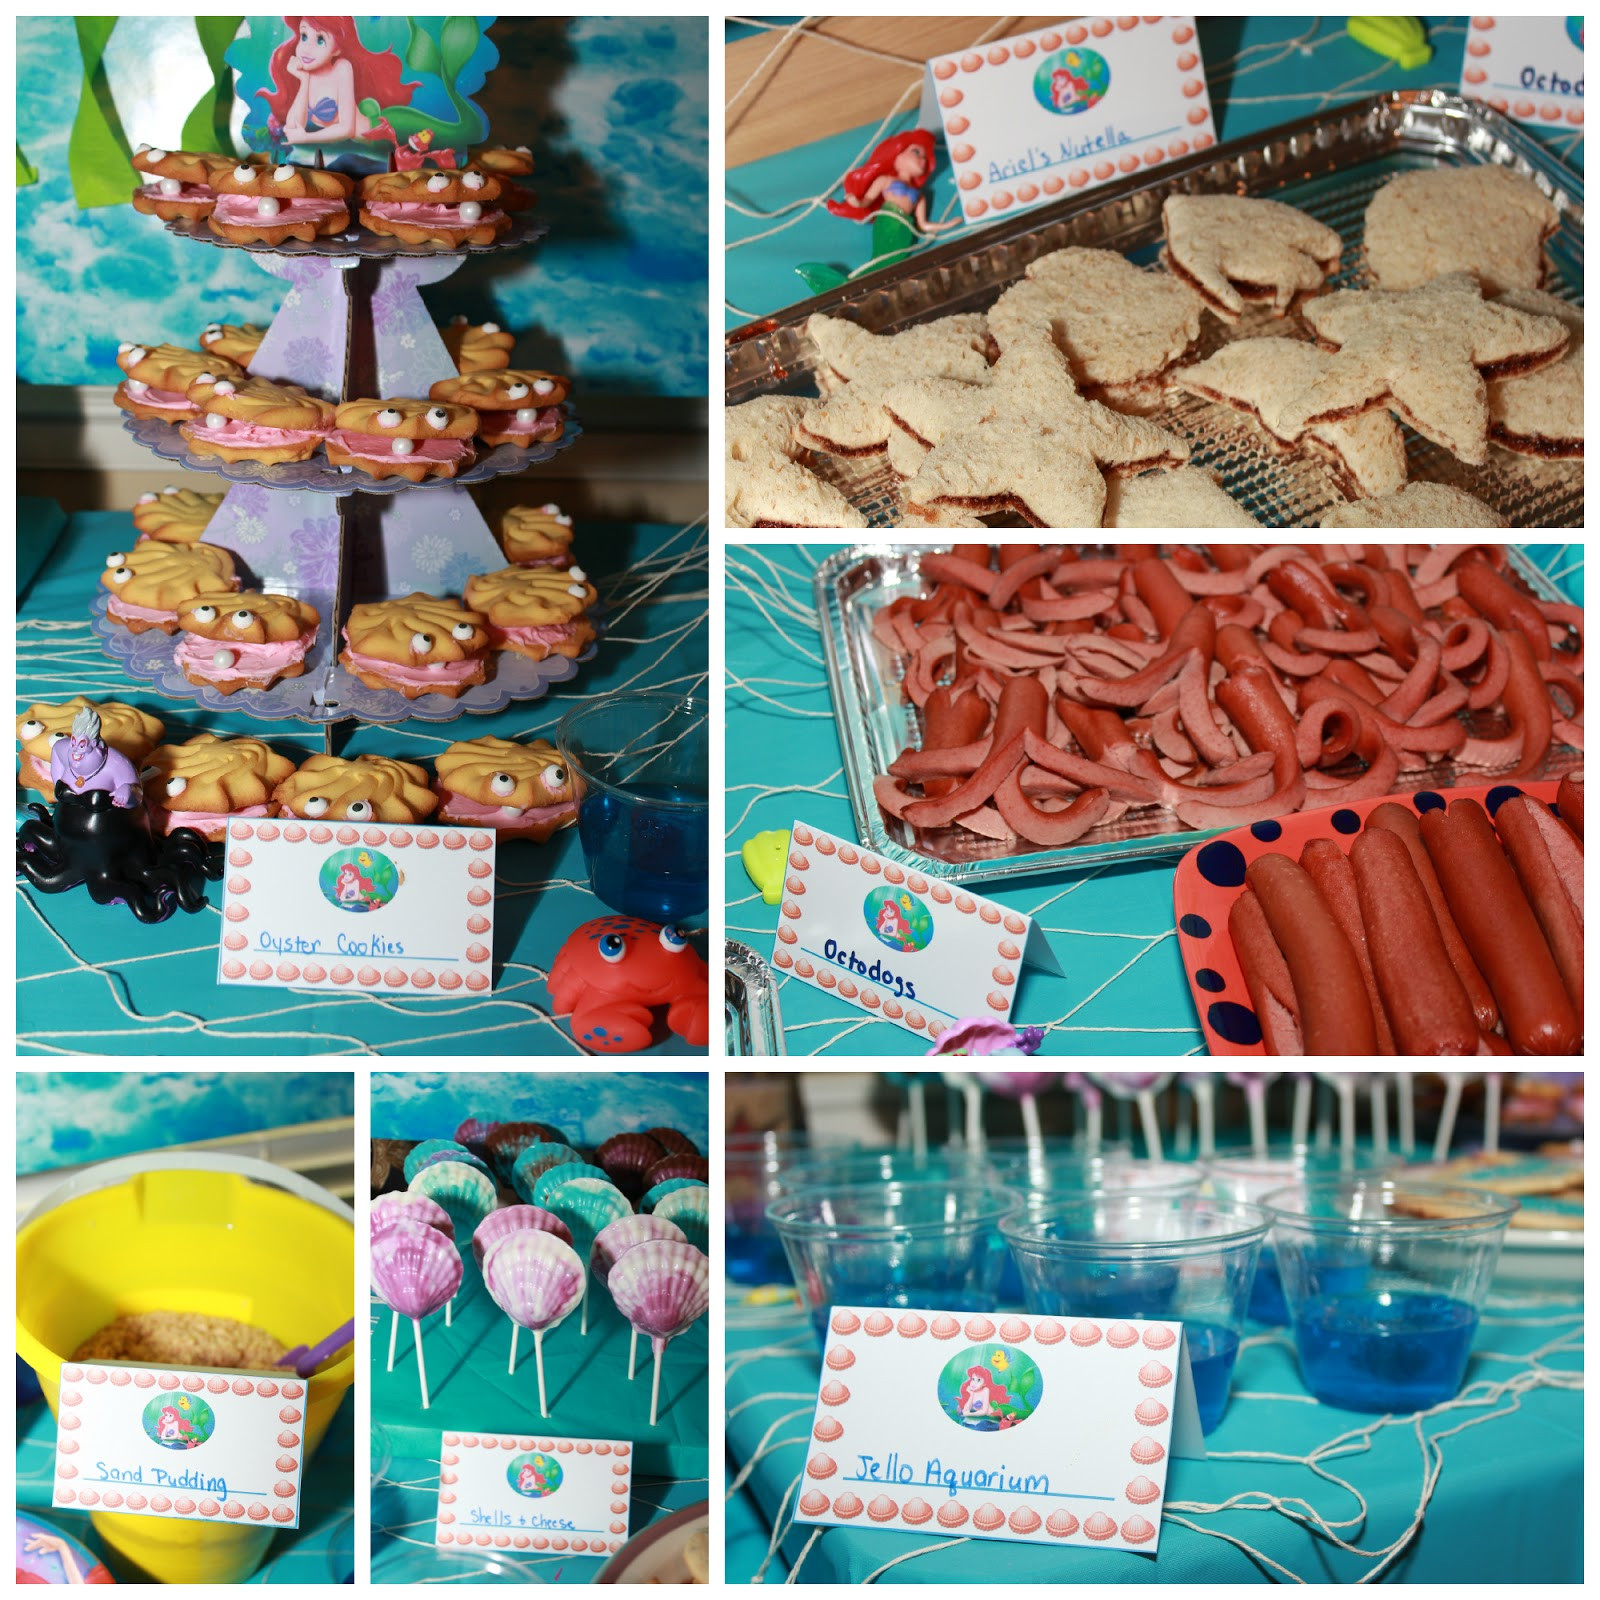 Little Mermaid Birthday Party Food Ideas
 Melissa s Party Ideas The Little Mermaid Party Ideas